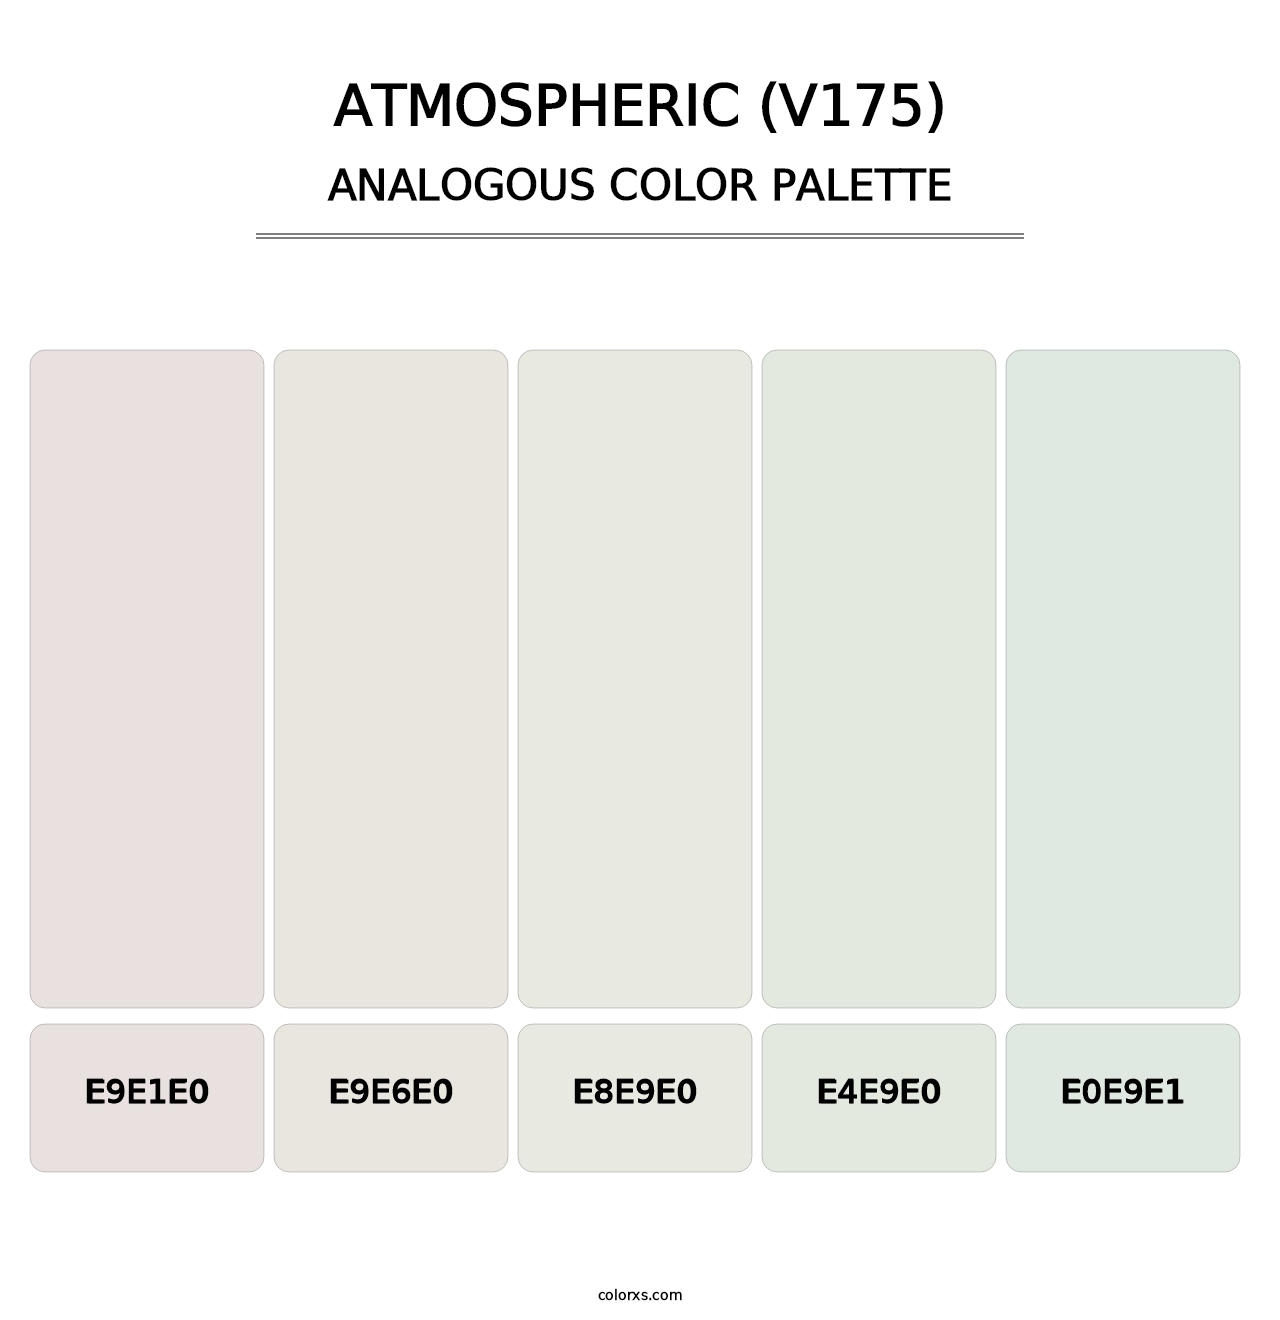 Atmospheric (V175) - Analogous Color Palette